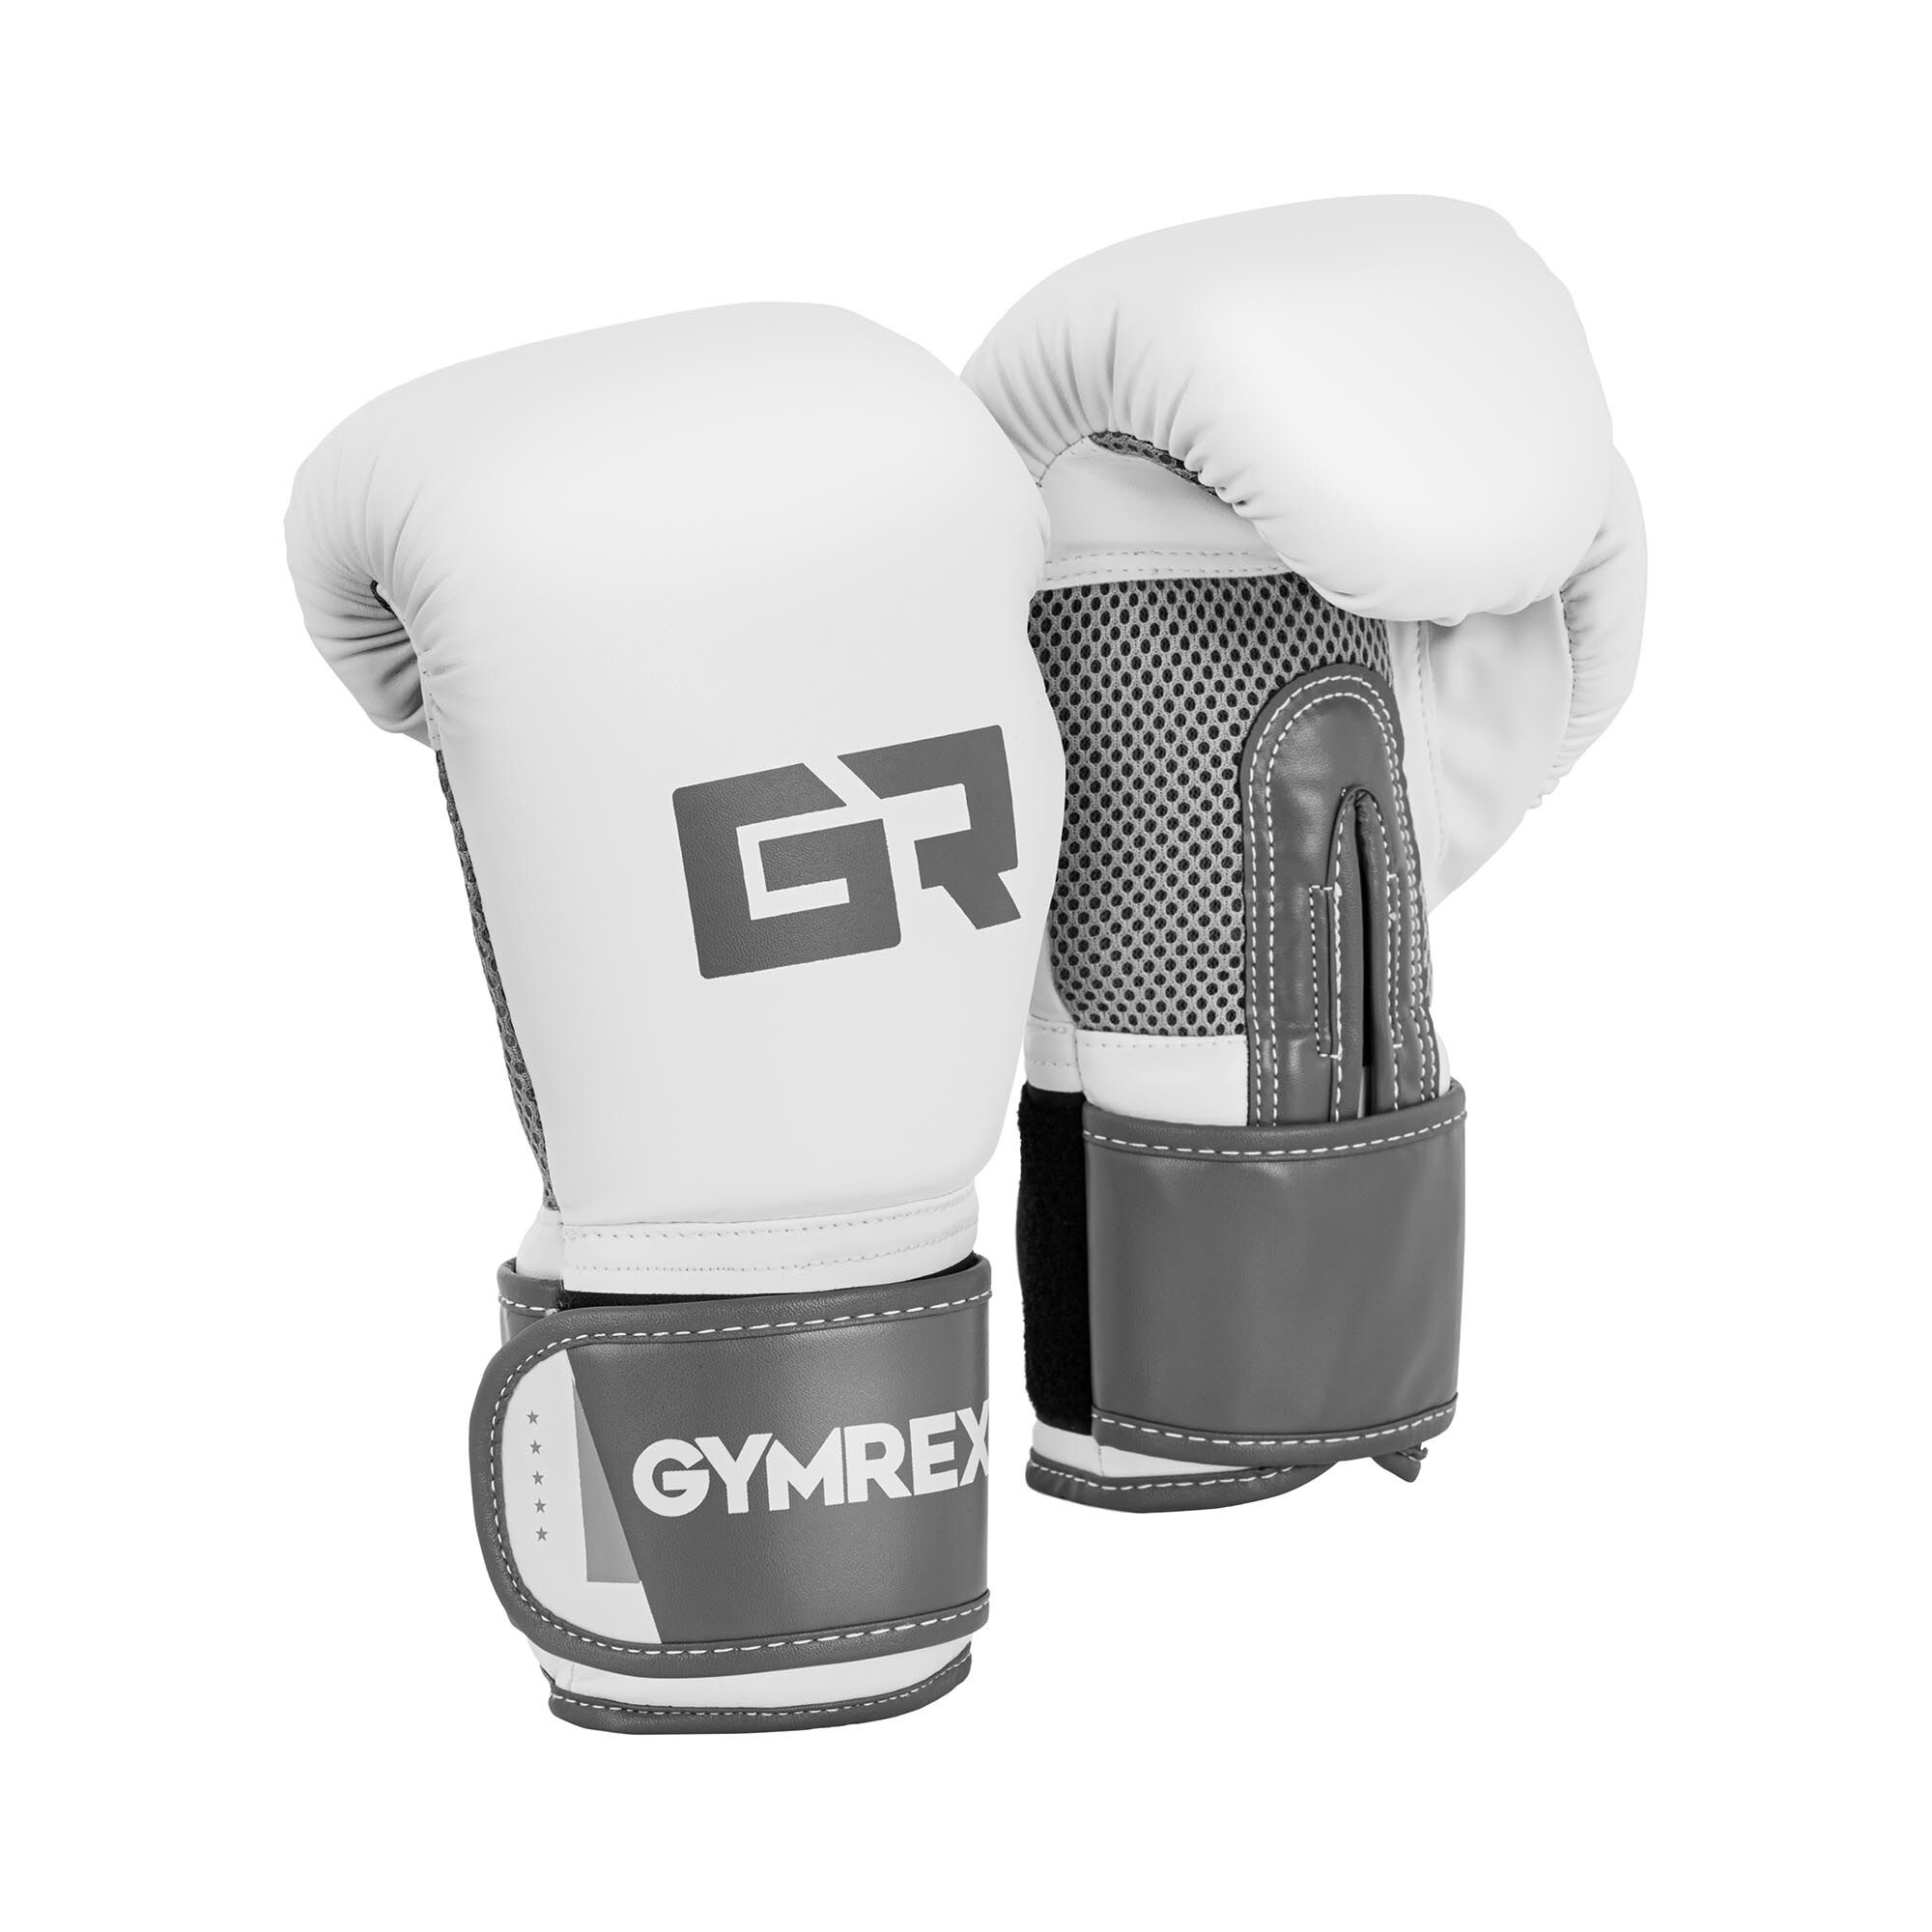 Gymrex Boxing Gloves - 10 oz - interior mesh - white and light metallic grey GR-BG 10B